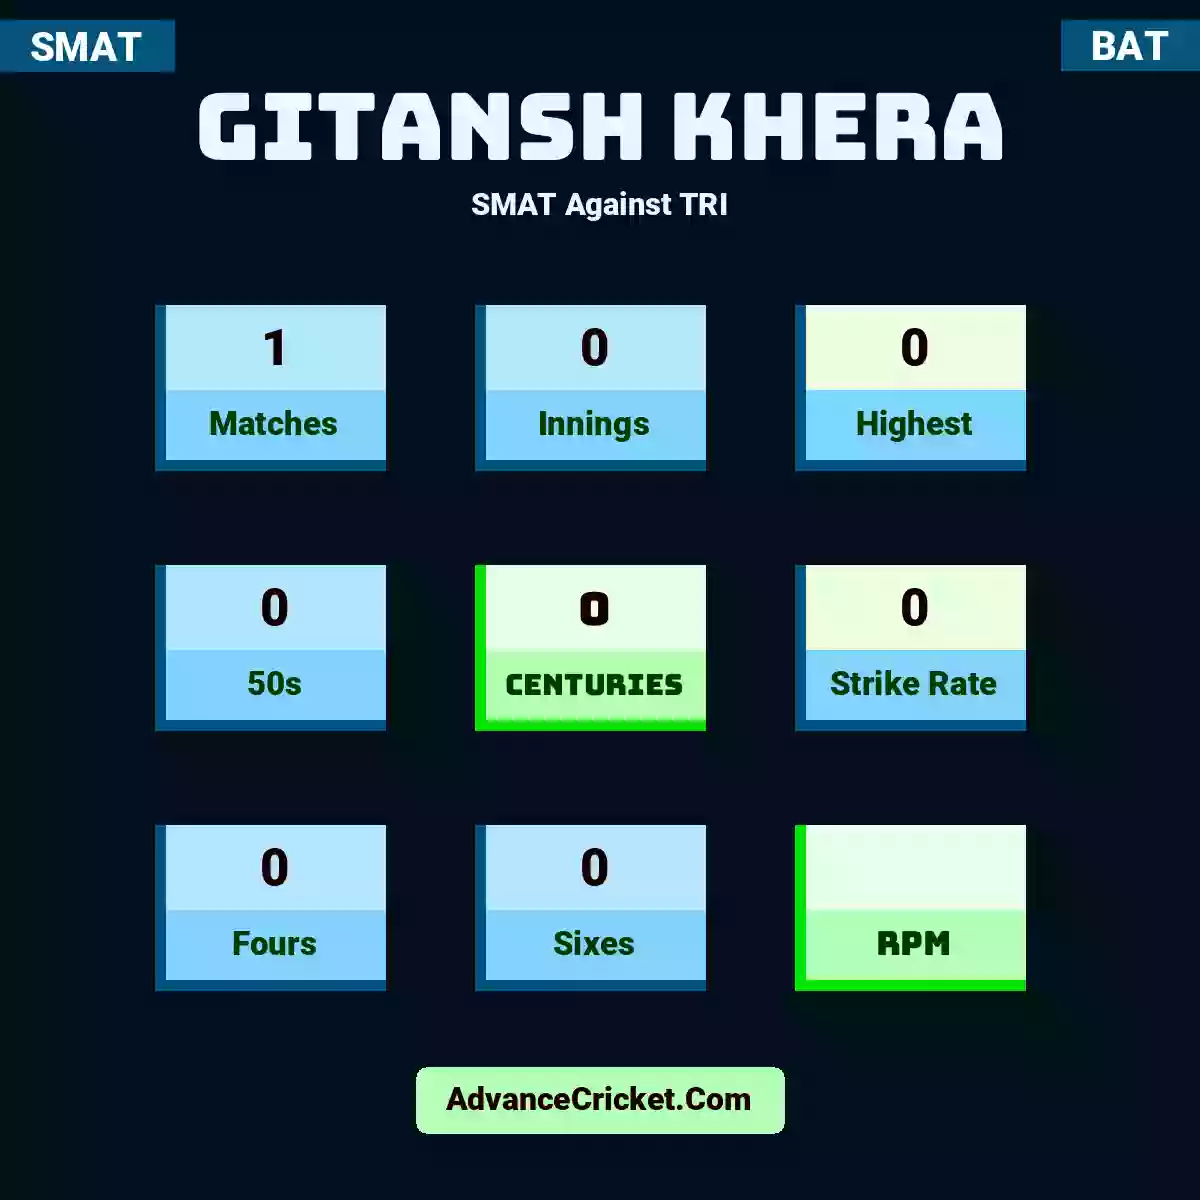 Gitansh Khera SMAT  Against TRI, Gitansh Khera played 1 matches, scored 0 runs as highest, 0 half-centuries, and 0 centuries, with a strike rate of 0. G.Khera hit 0 fours and 0 sixes.